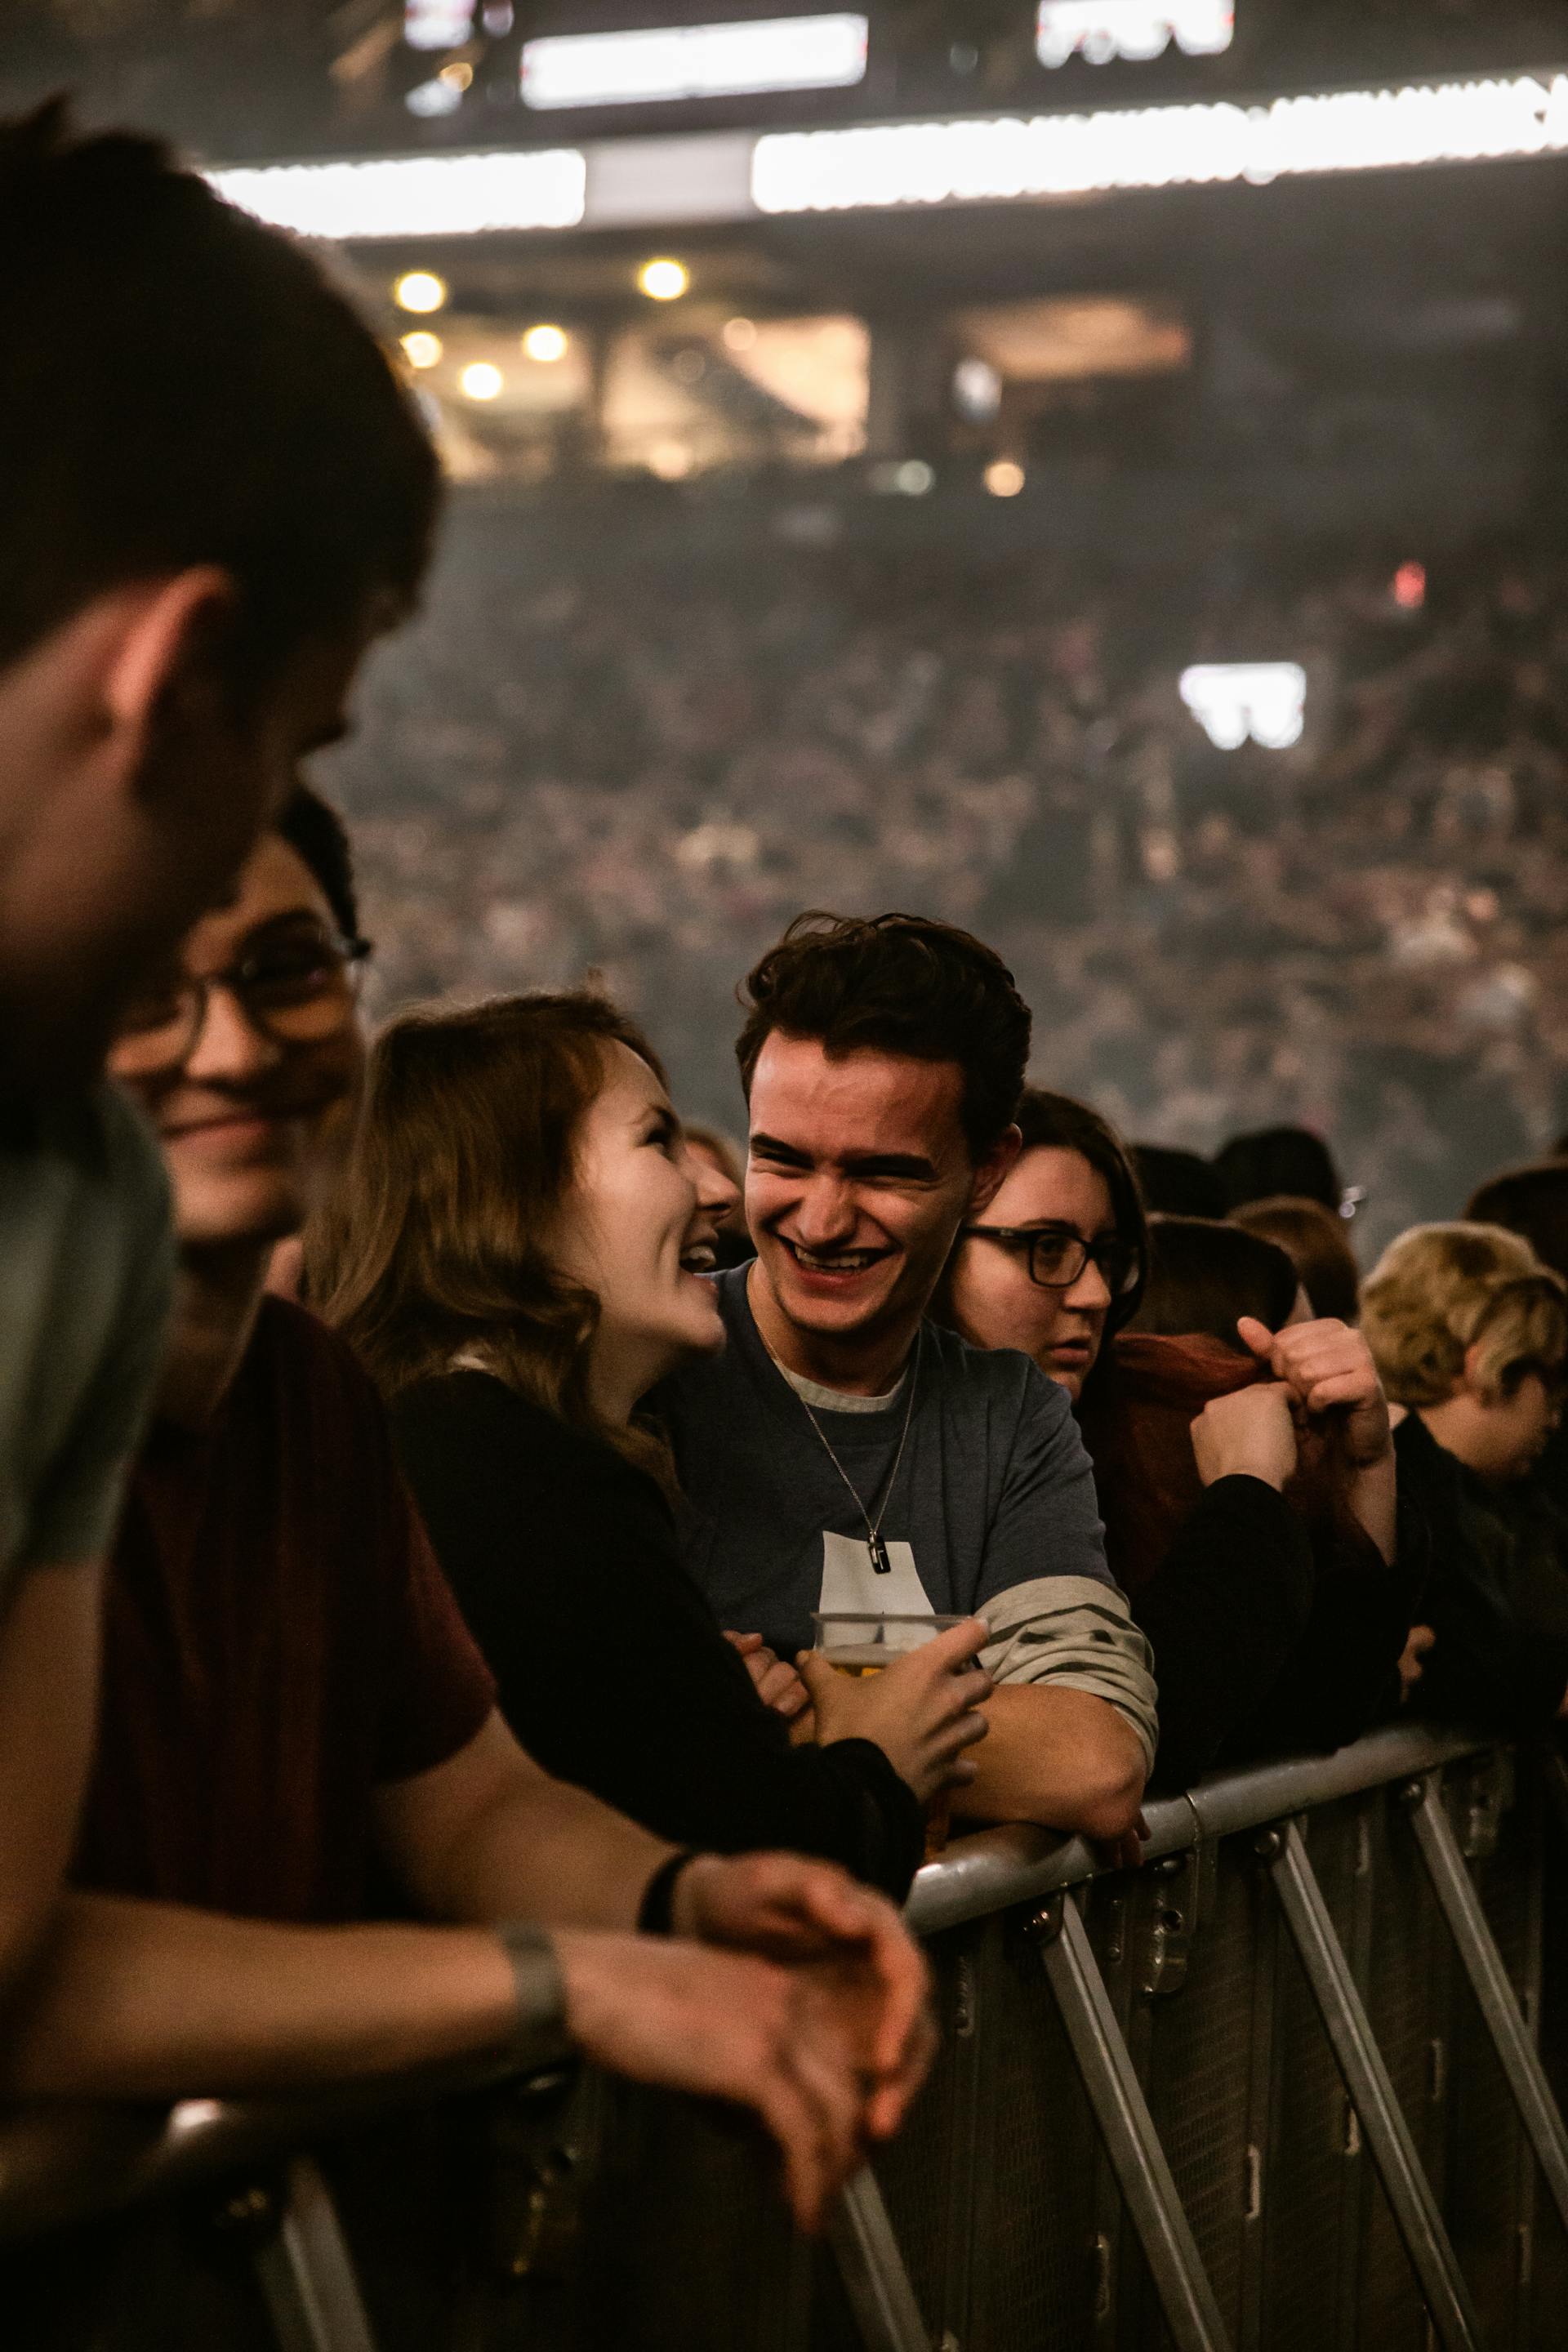 People attending a concert | Source: Pexels